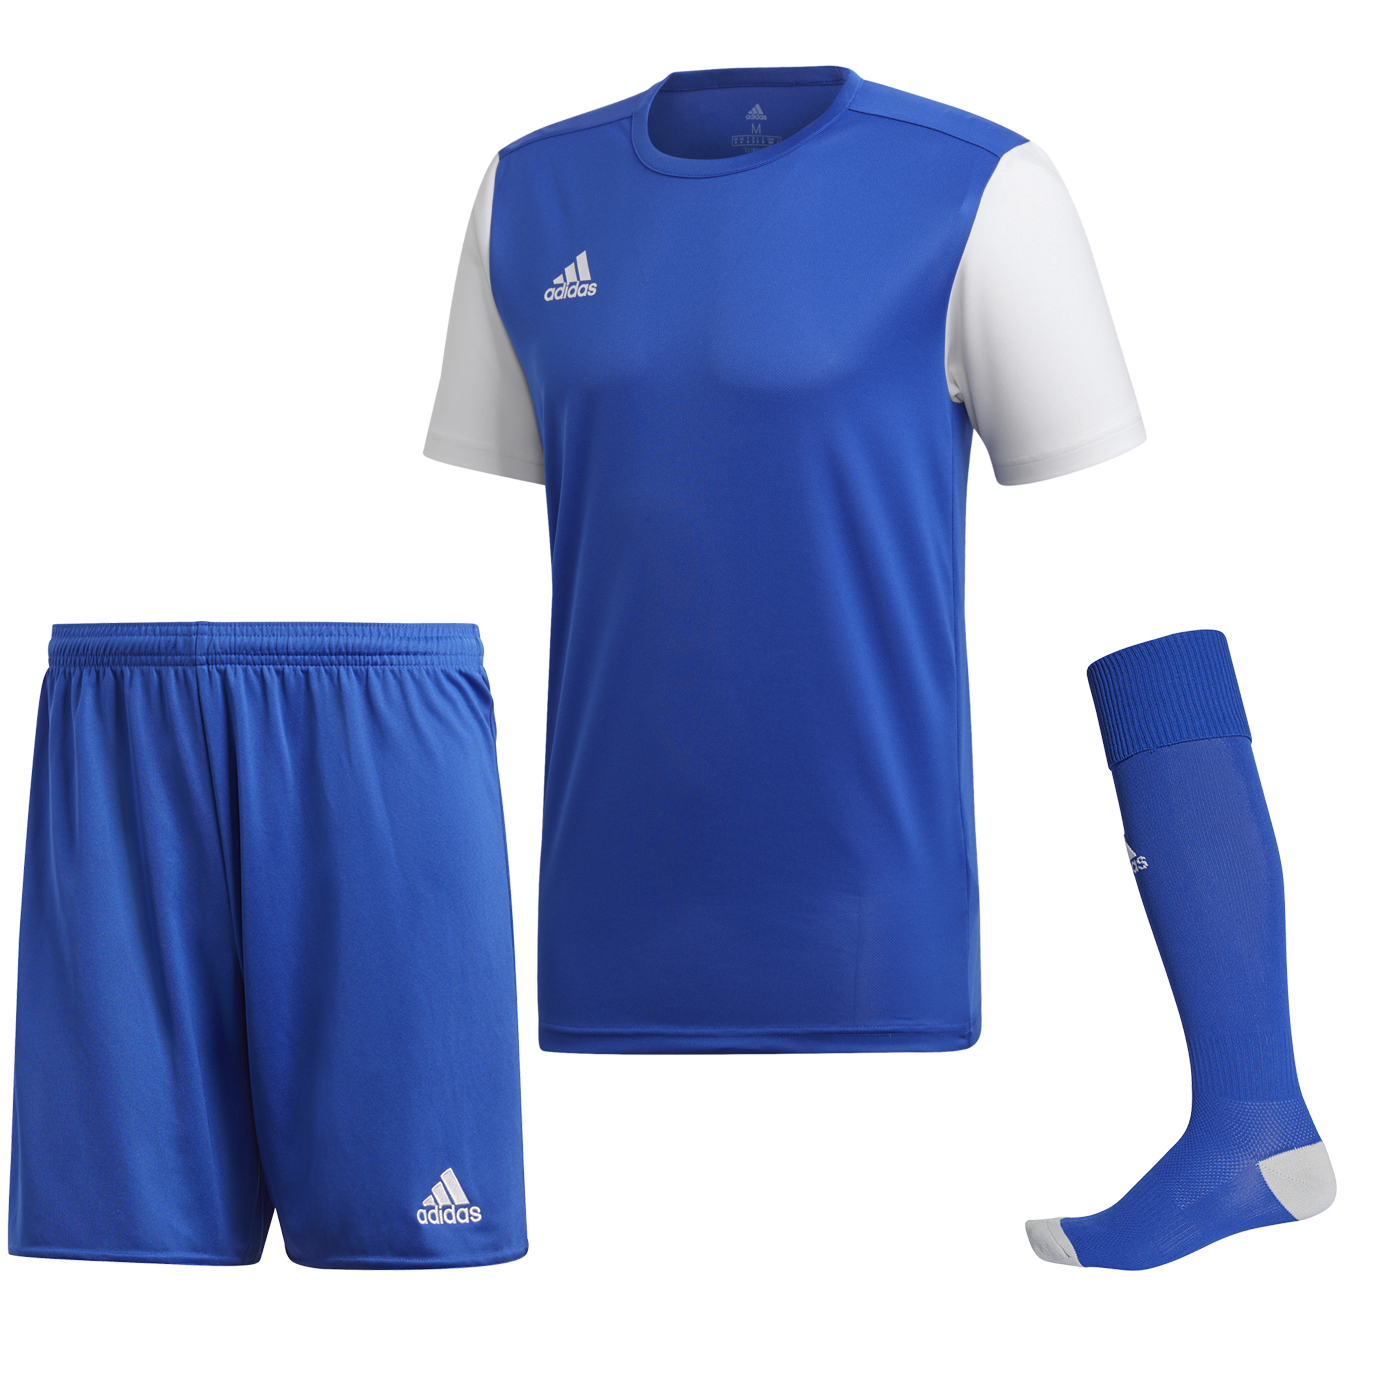 Adidas Estro 19 modrá/bílá UK Junior L Dětské